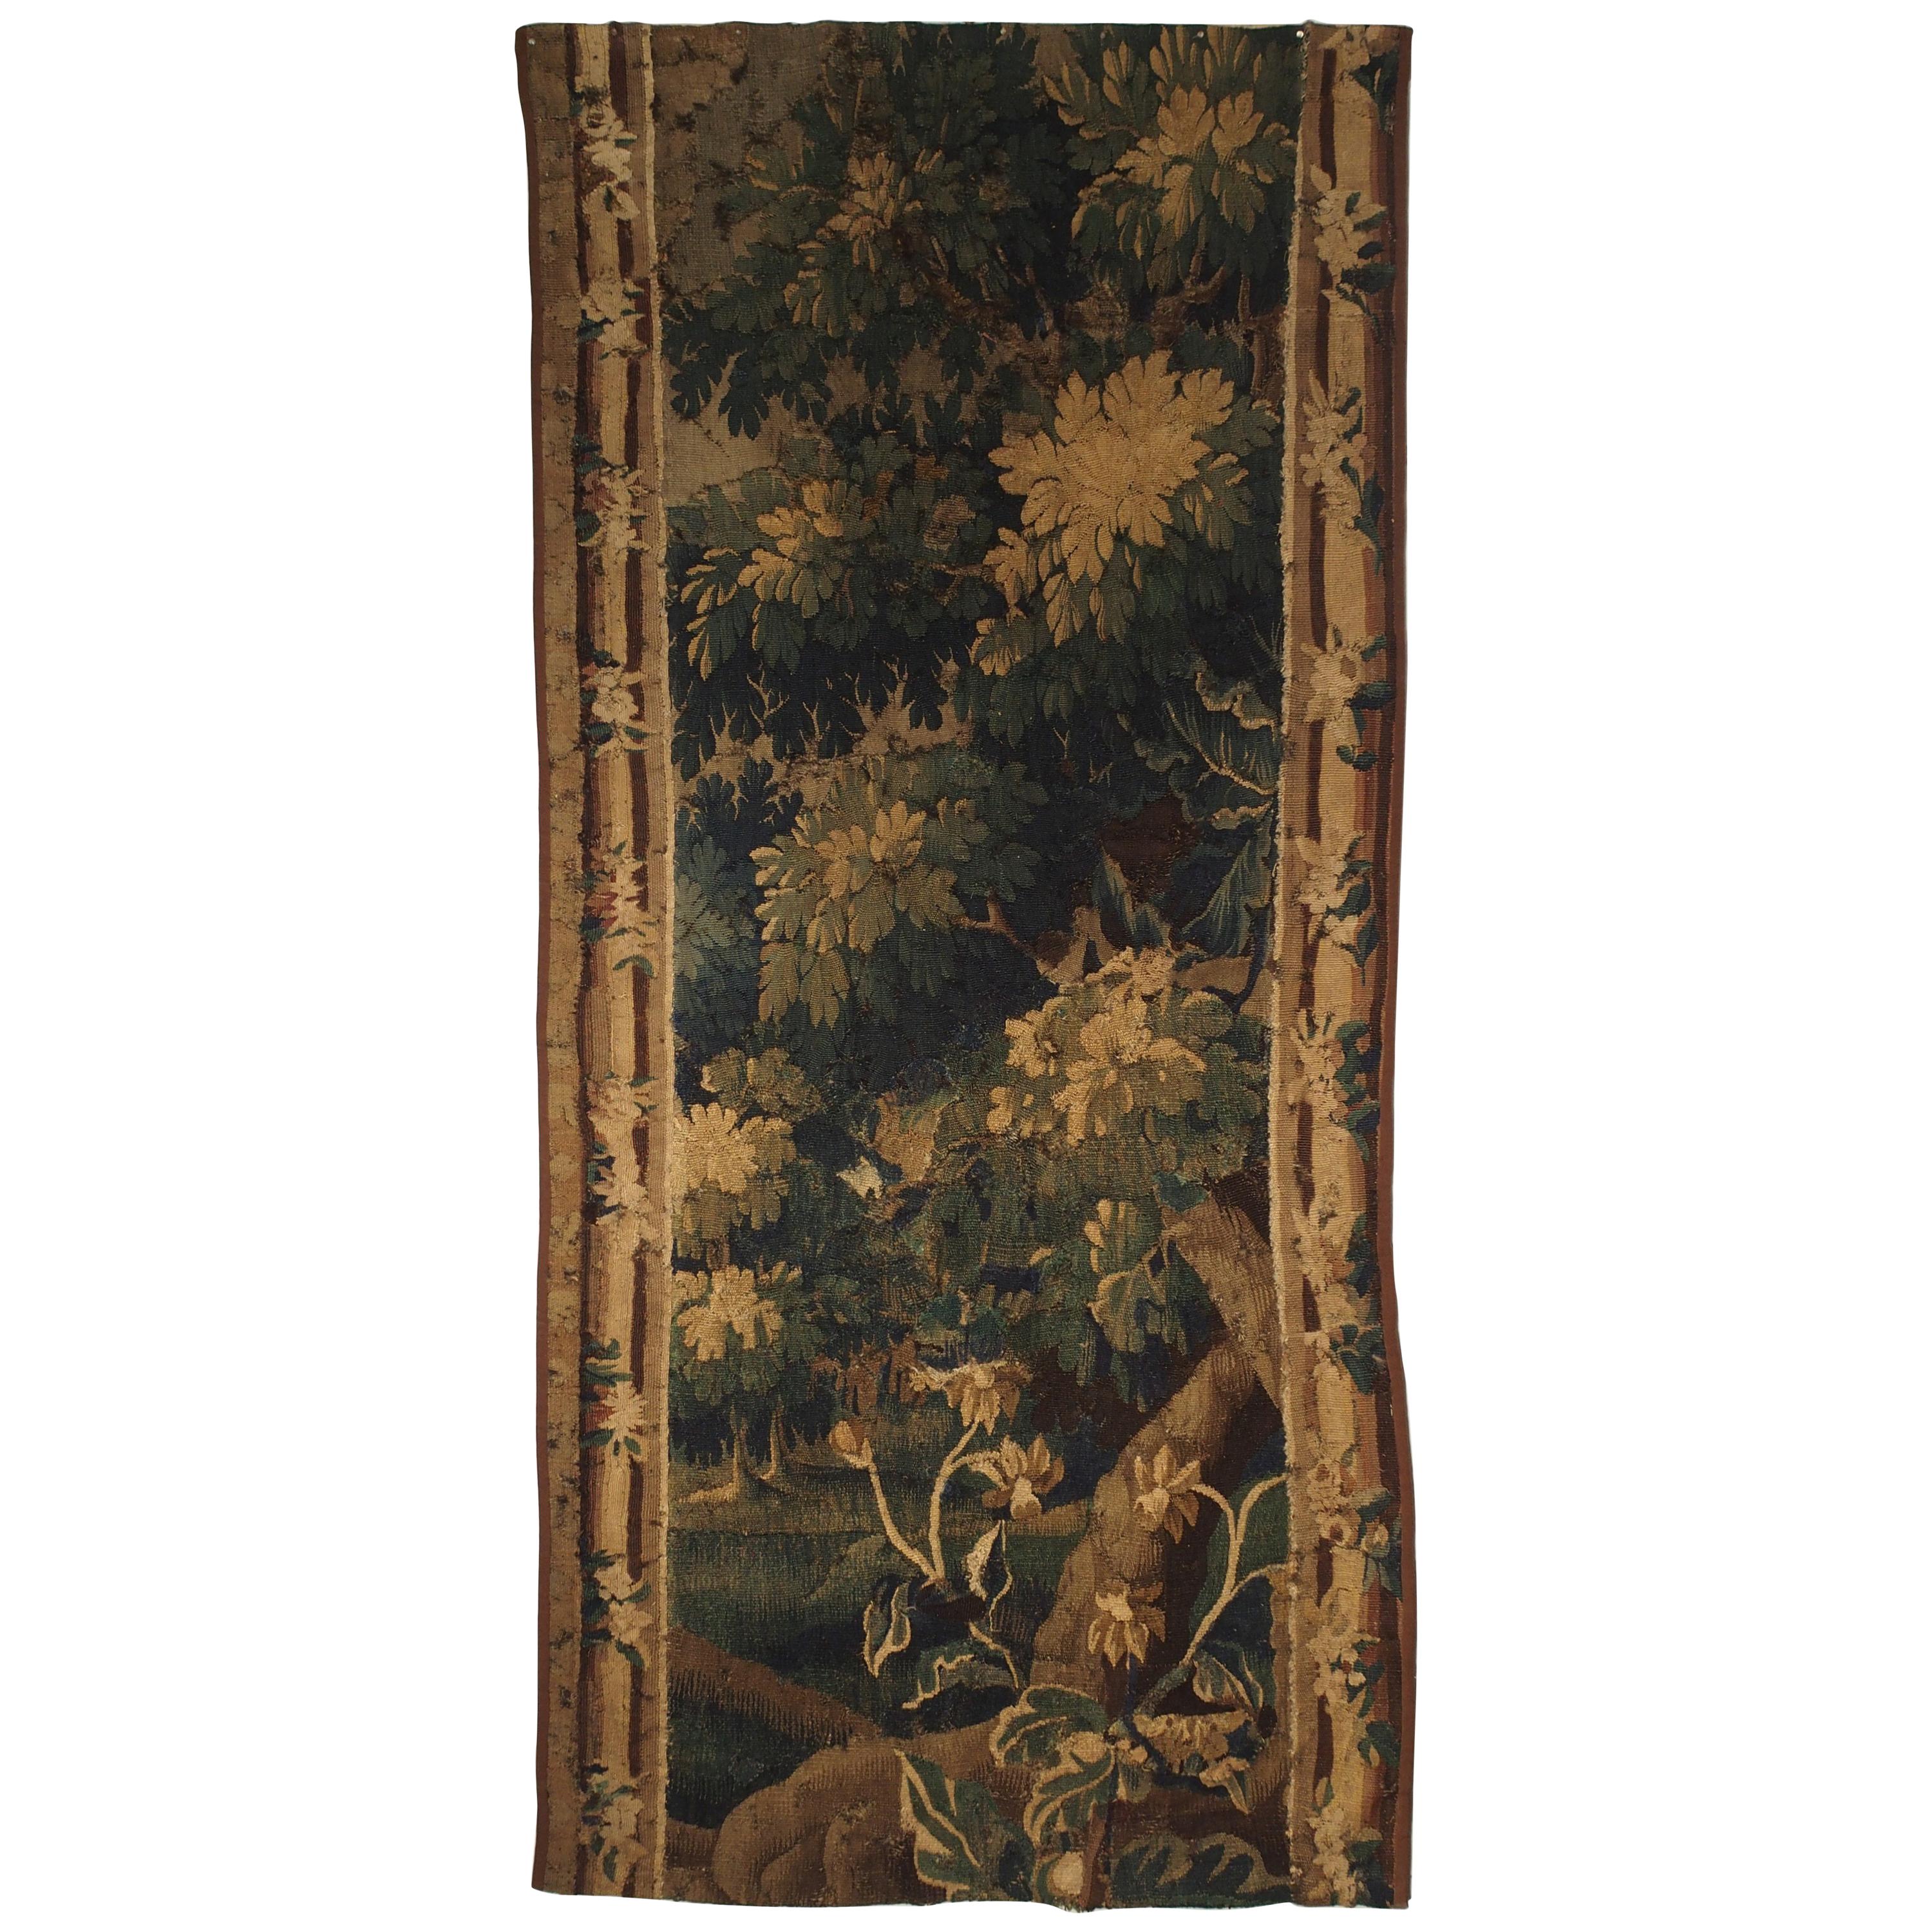 Antique Aubusson Verdure Tapestry Fragment